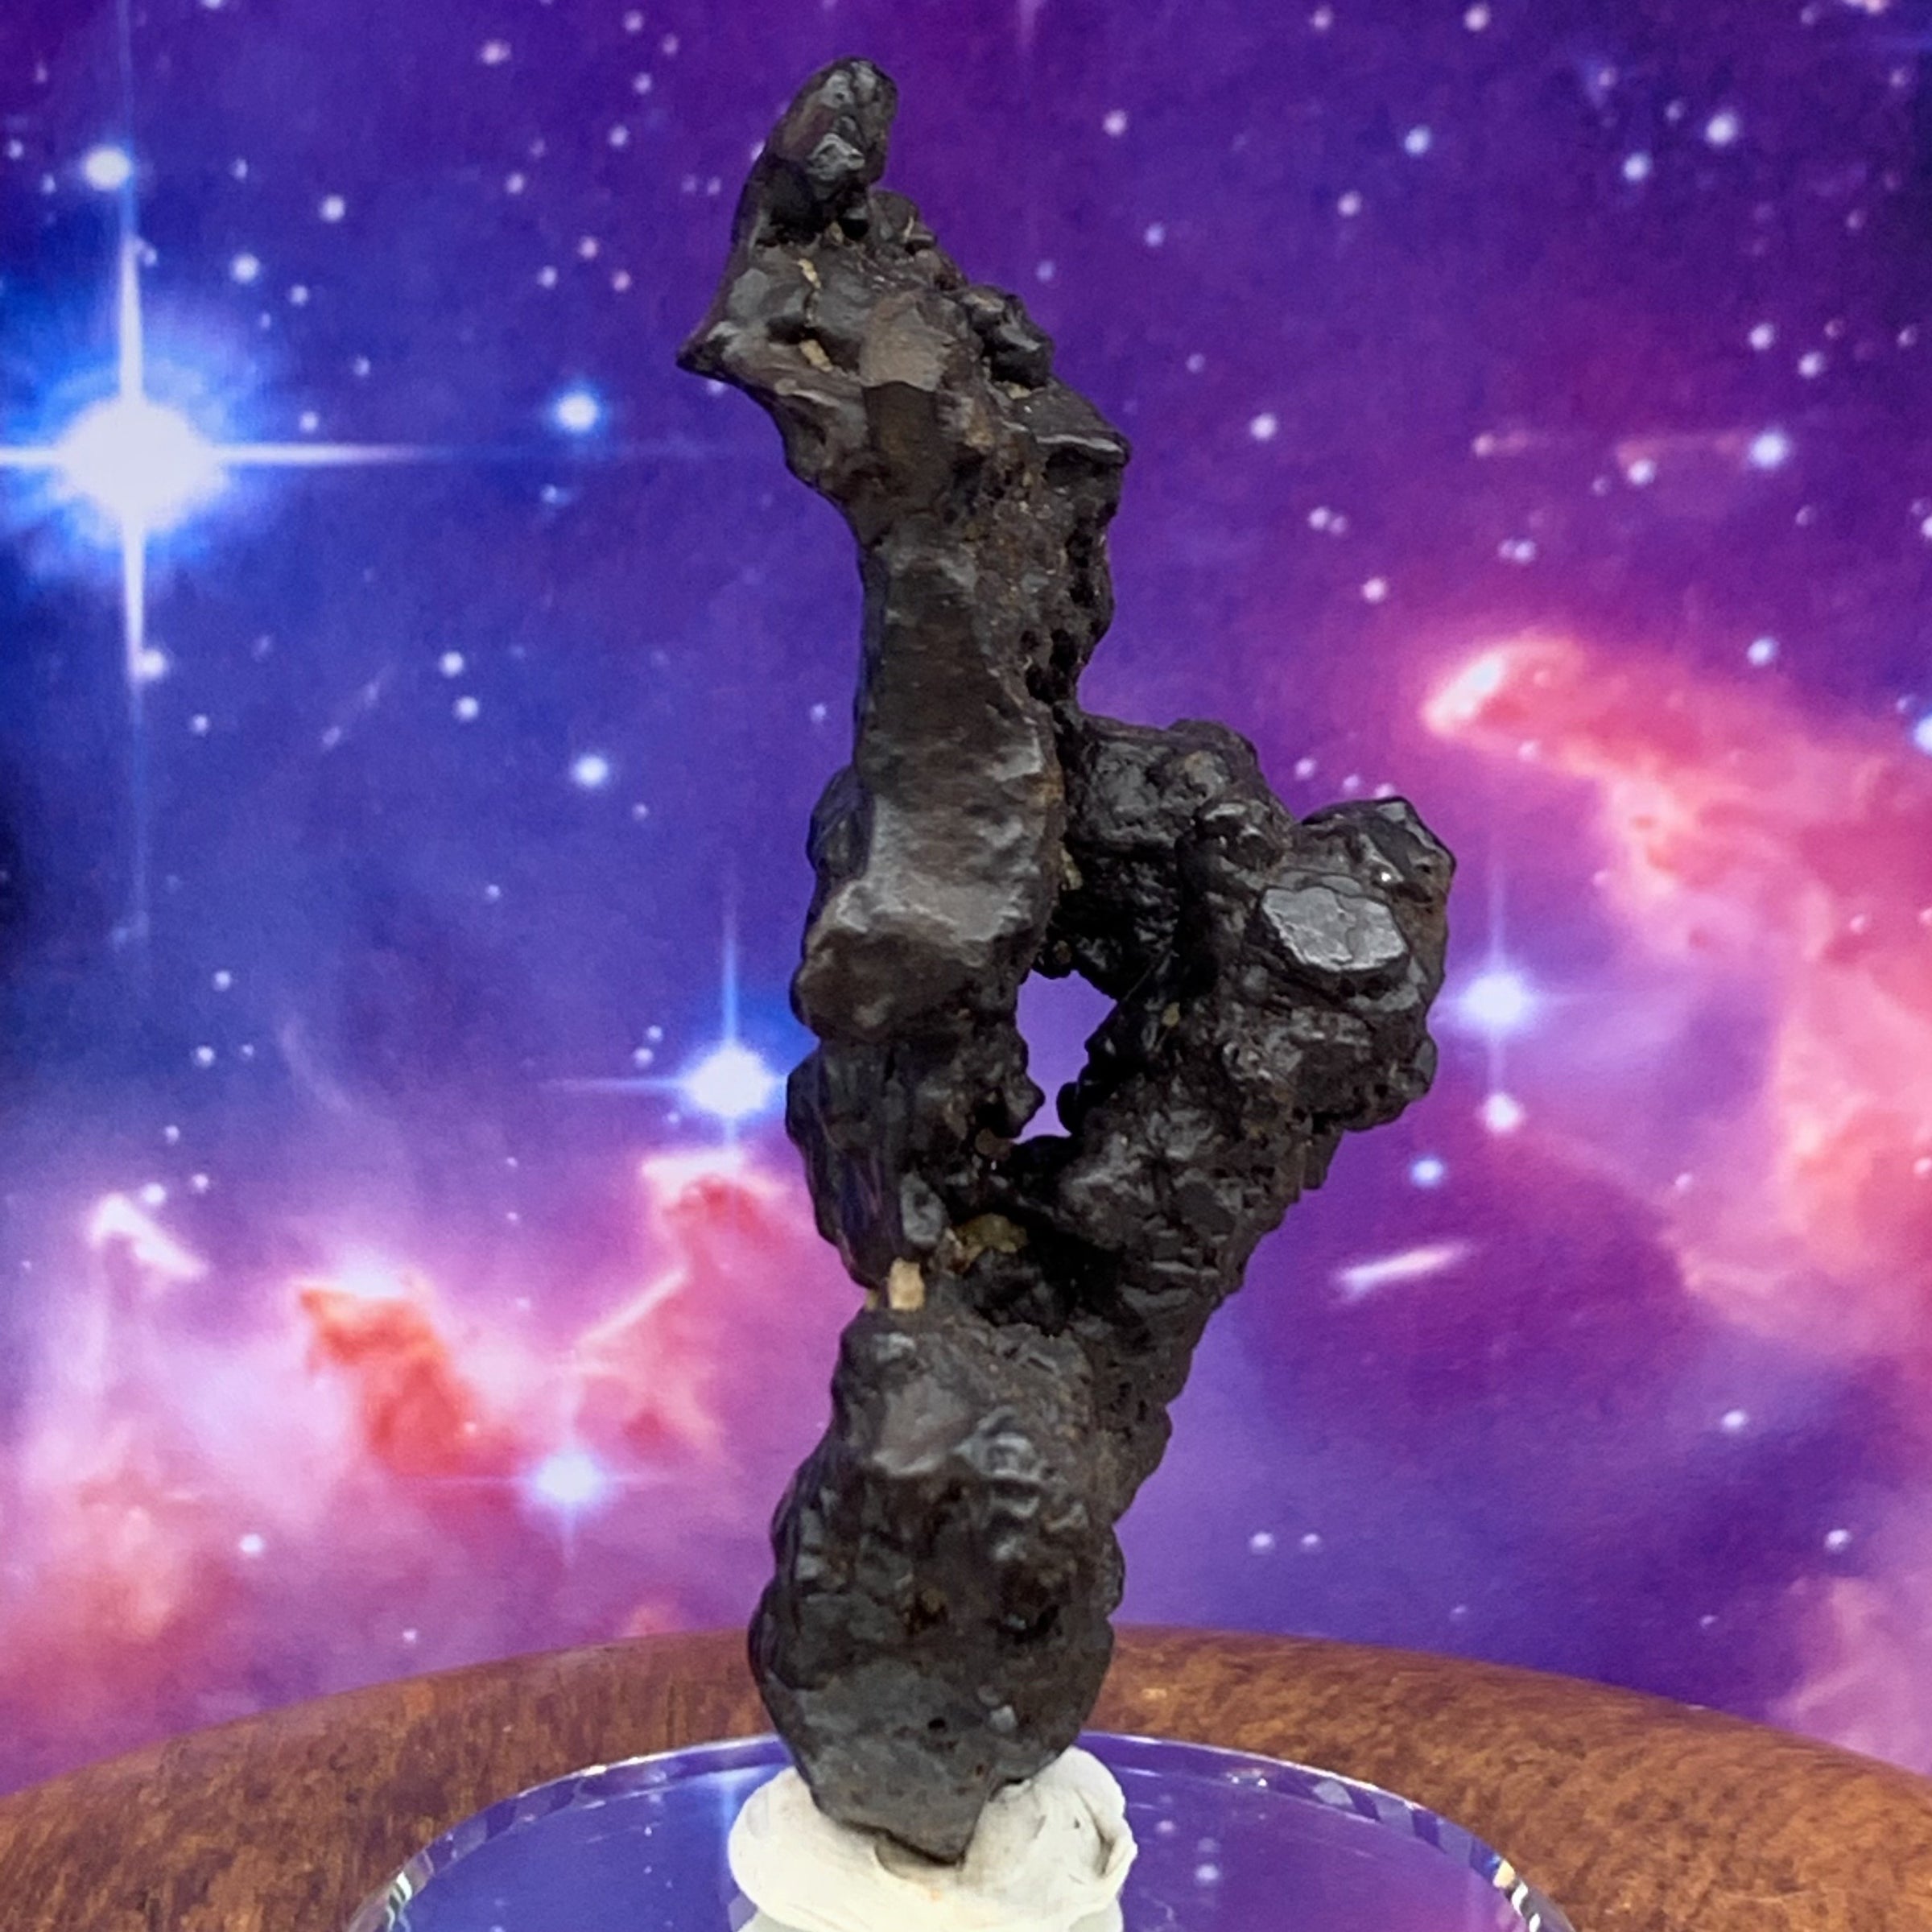 Prophecy Stone 56.7 grams-Moldavite Life